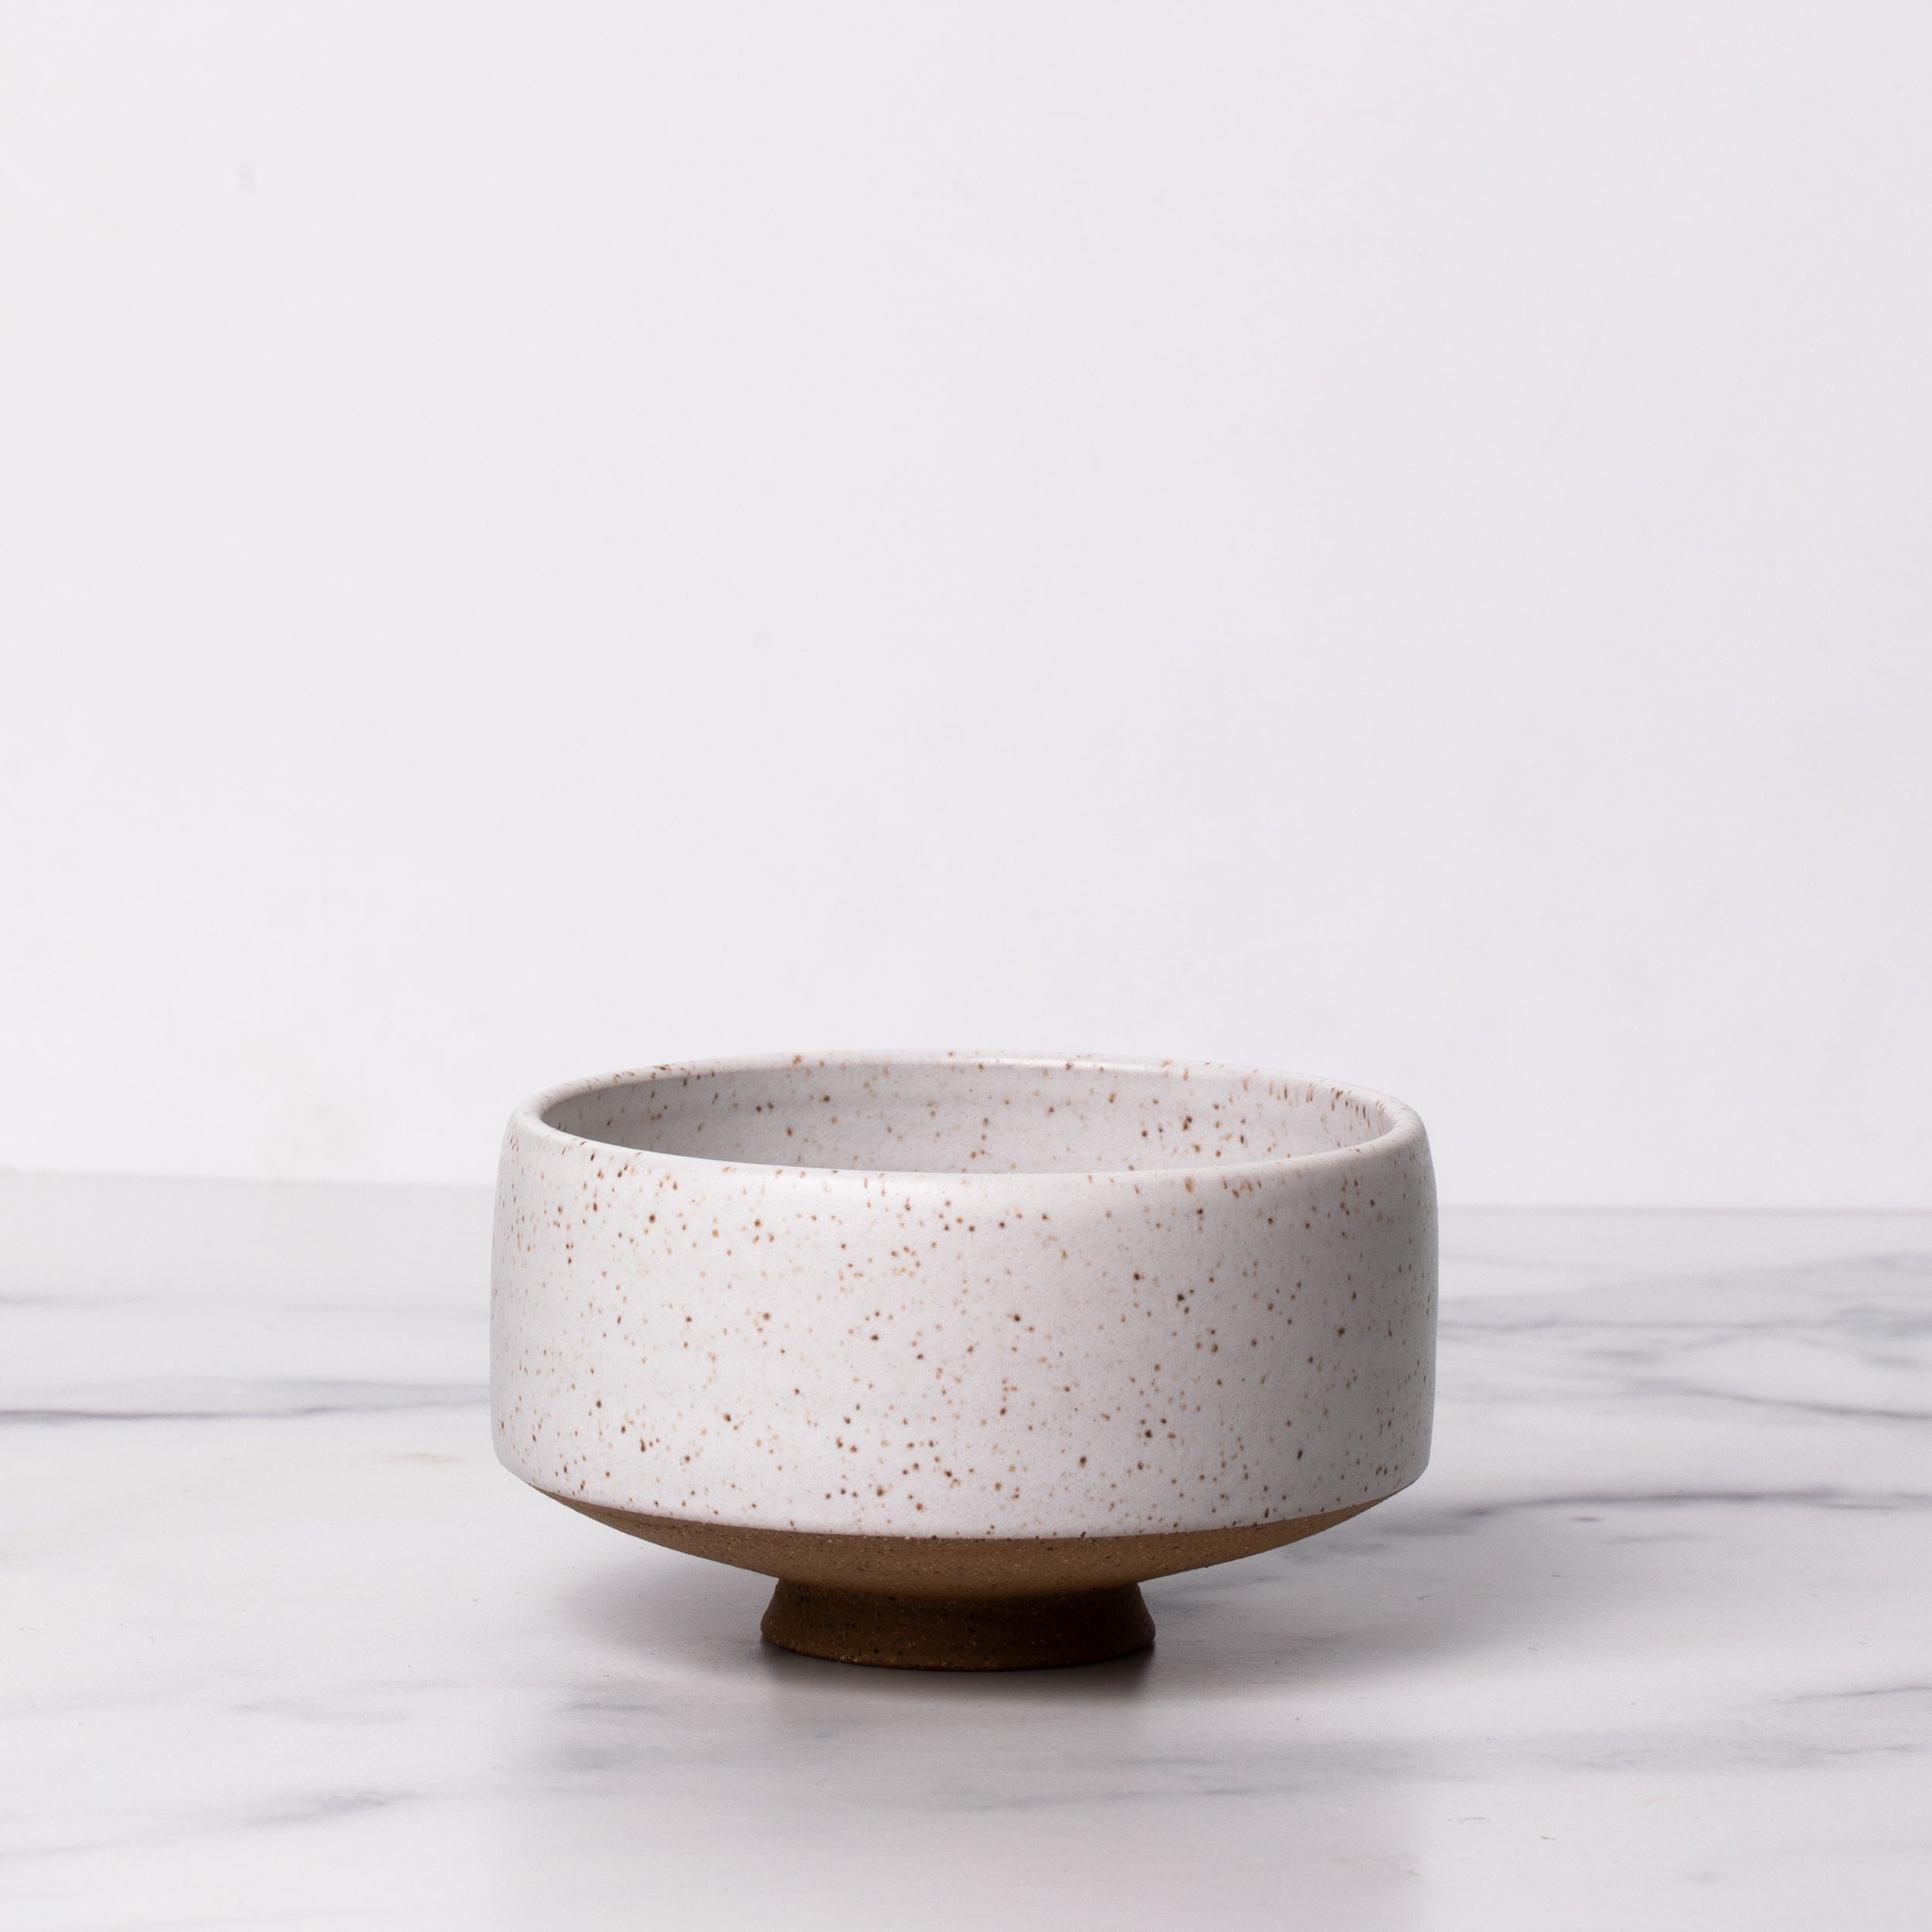 White ceramic bowl on marble background.